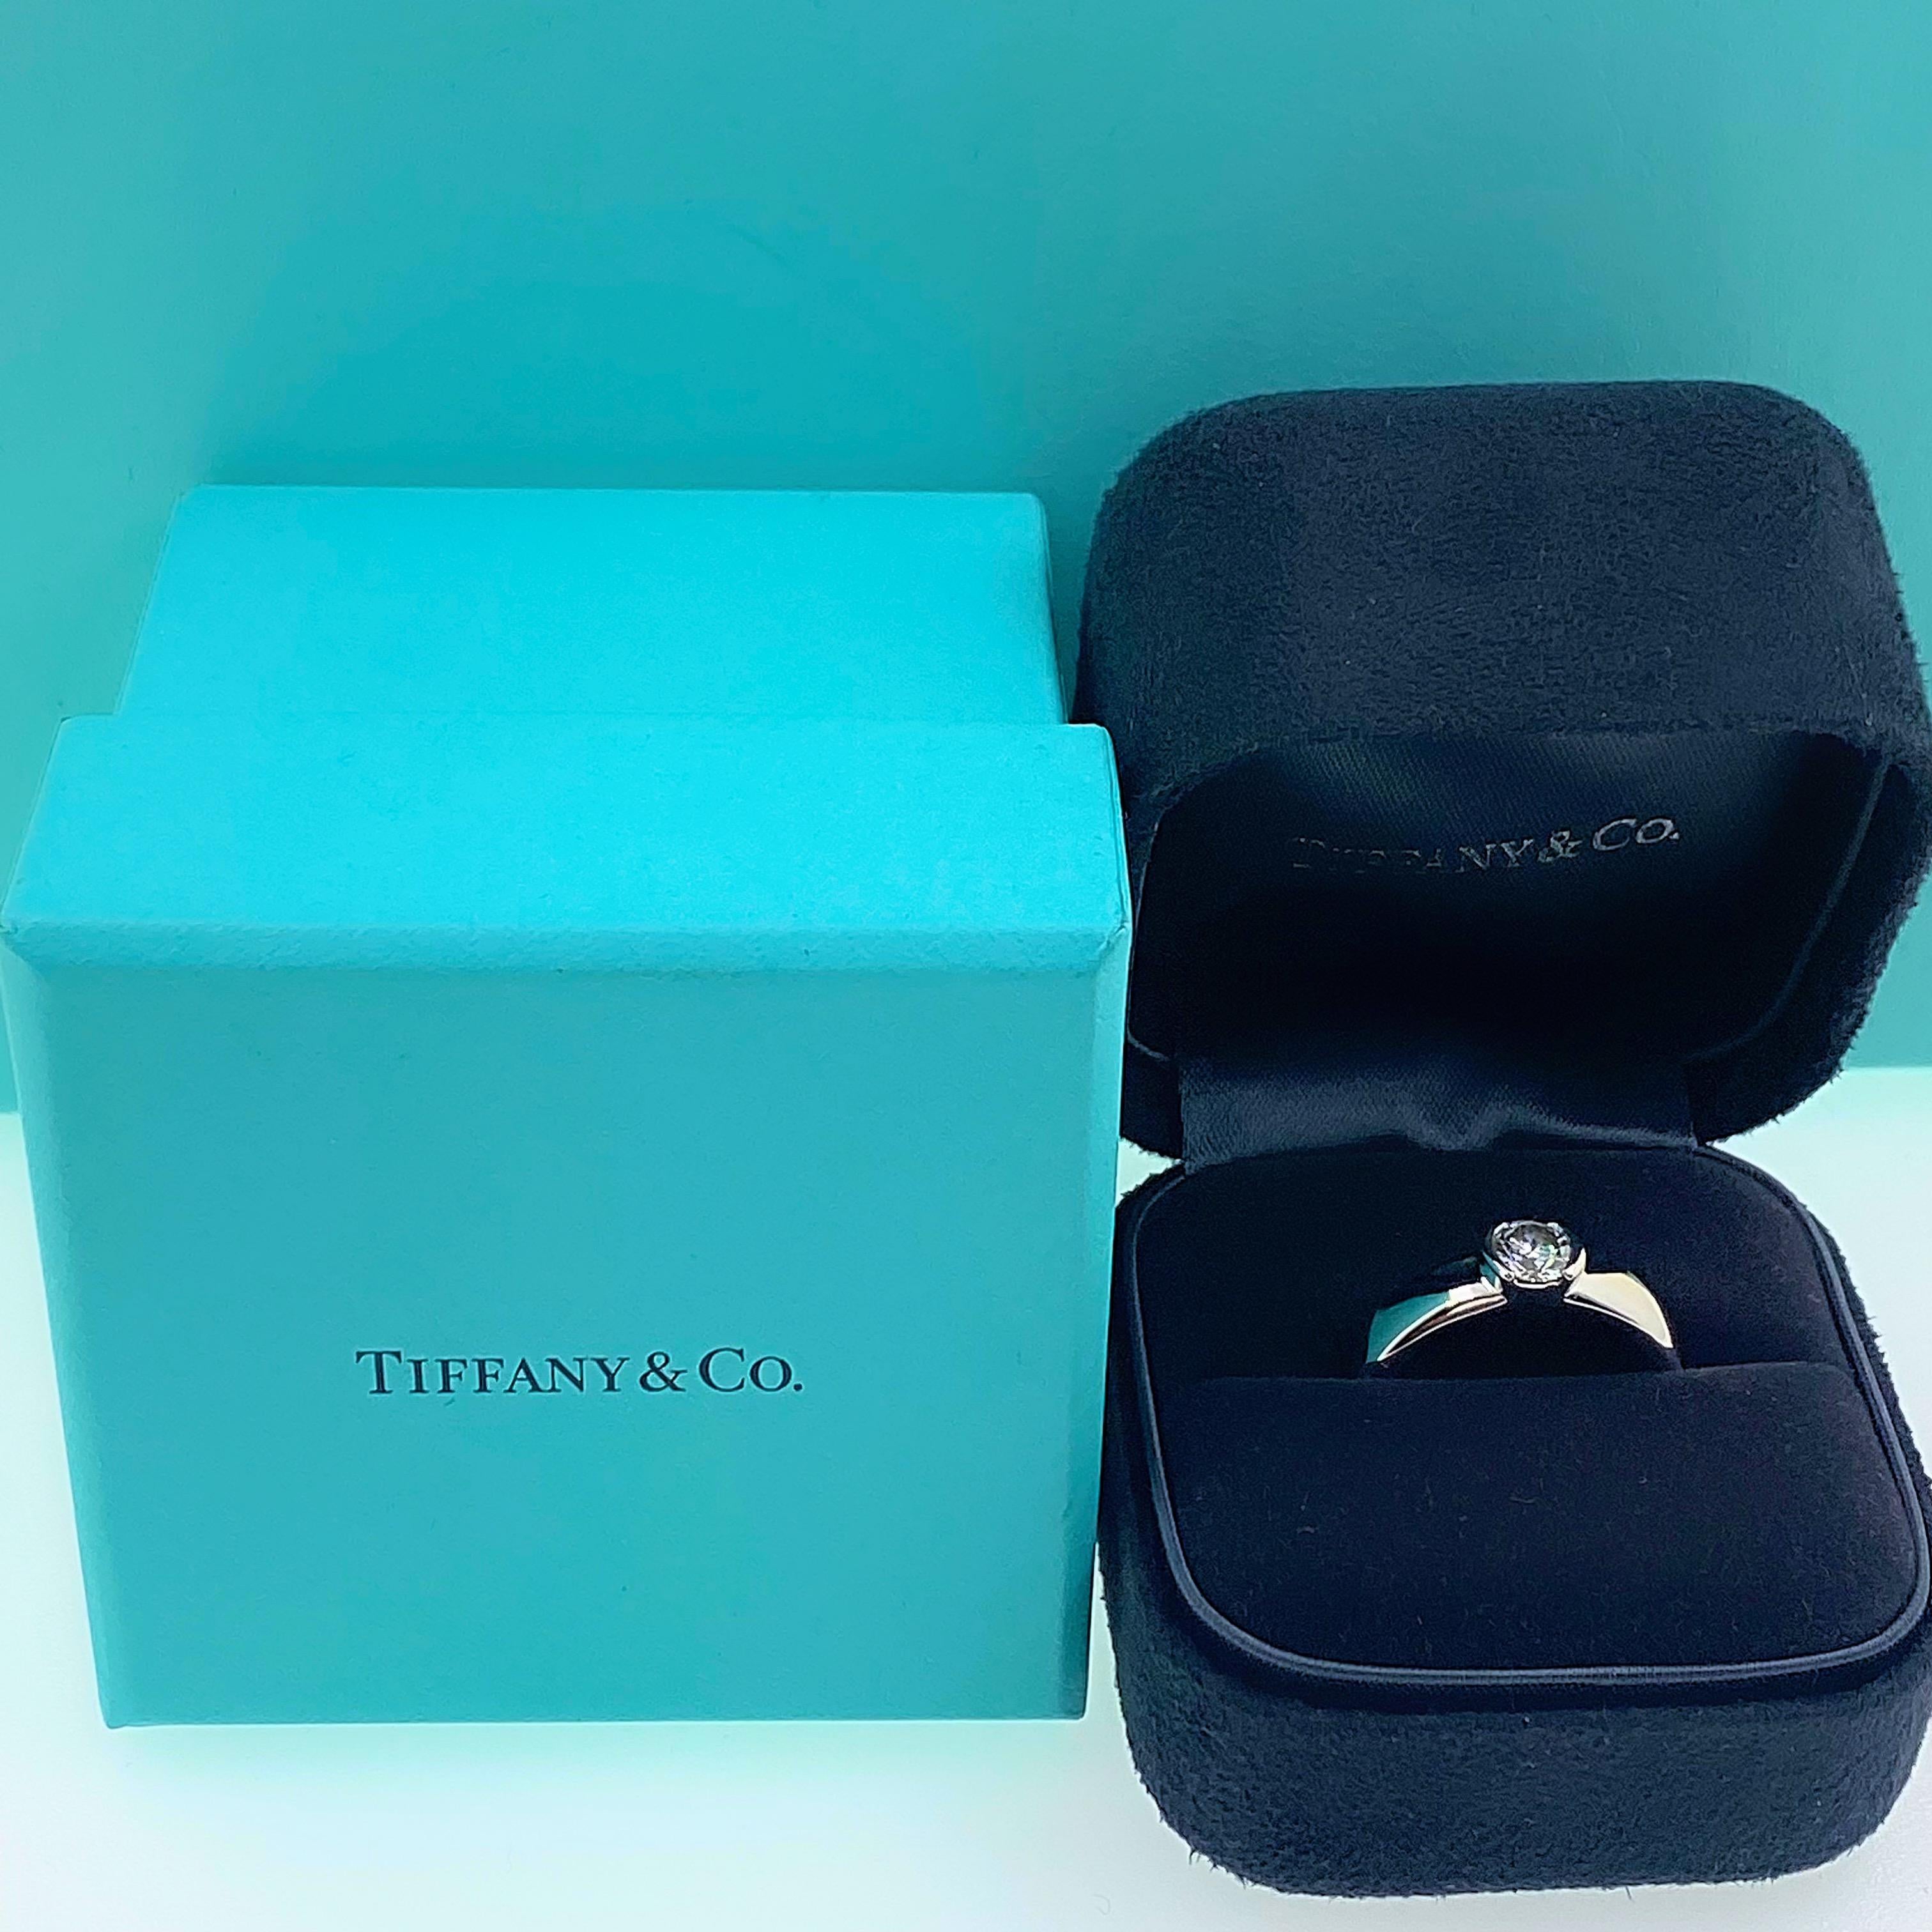 Tiffany & Co. Etoile Diamond Solitaire Engagement Ring
Style:  ETOILE
Ref. number:  27676642
Metal:  PT950 Platinum
Size:  5.75 sizable
TCW:  0.56 cts
Main Diamond:  Round Brilliant Diamond
Color & Clarity:  H, VVS2
Hallmark:  ©TIFFANY&Co. PT950